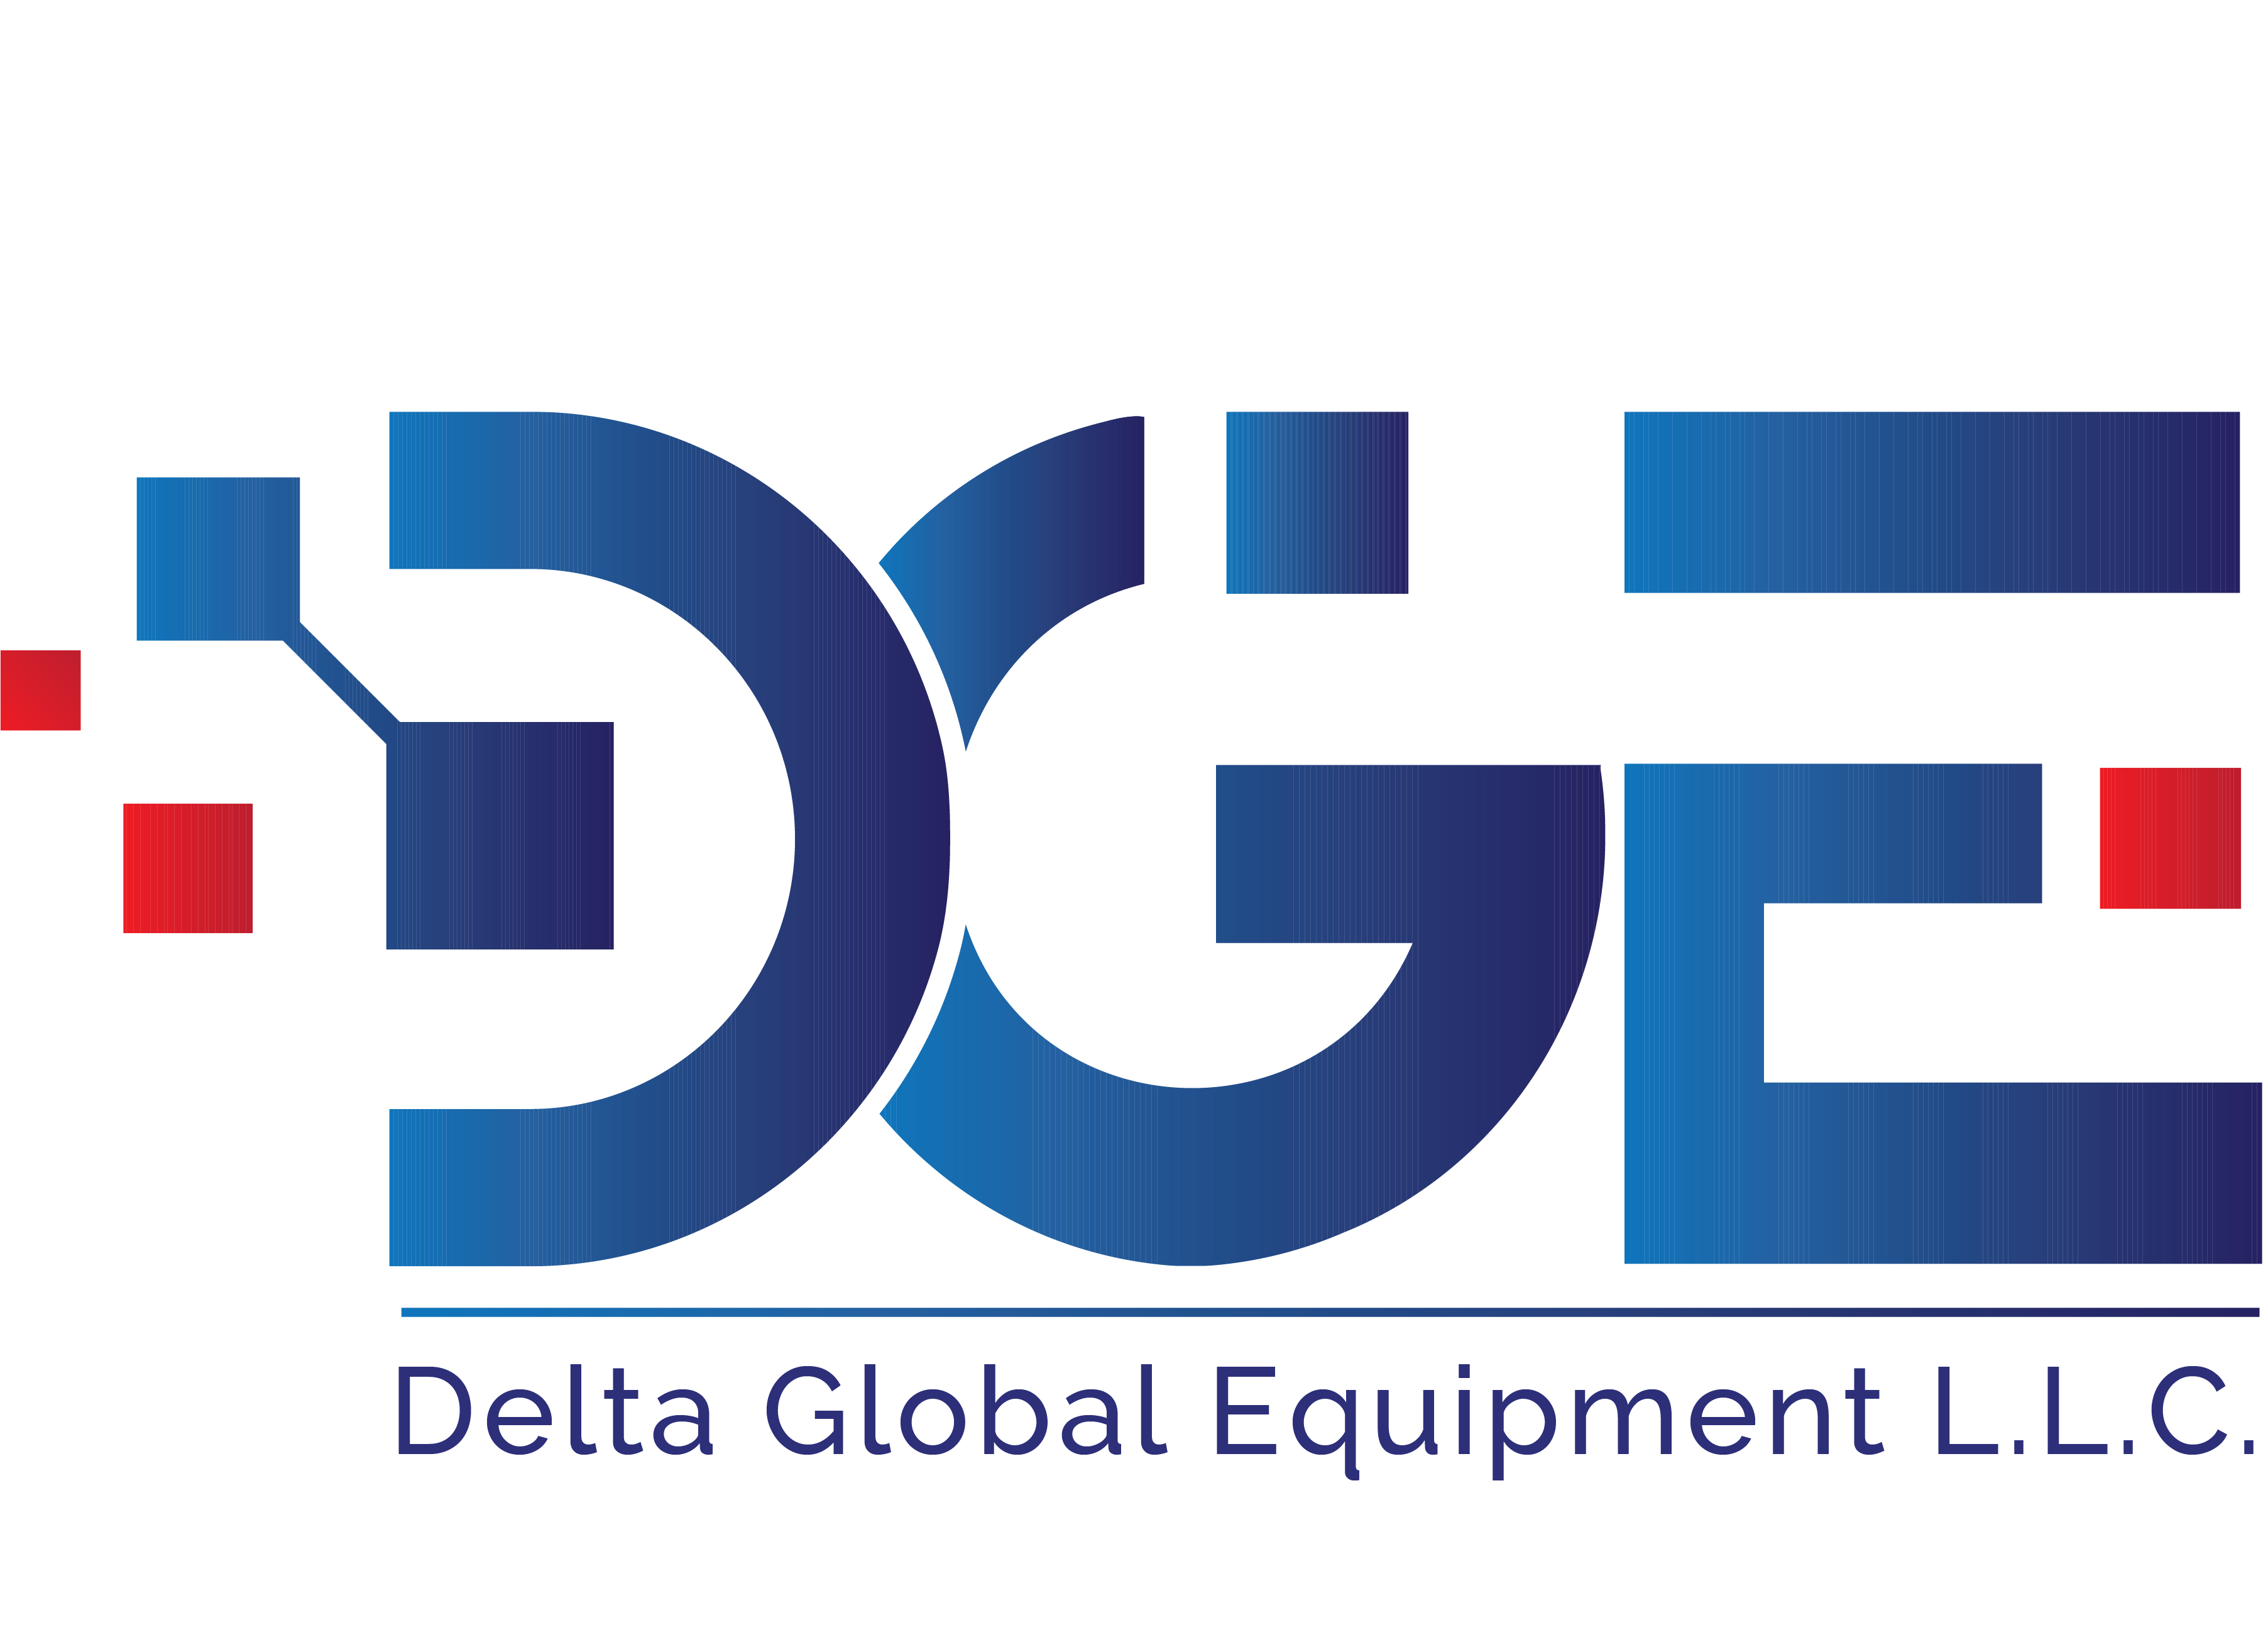 Delta Global Equipments